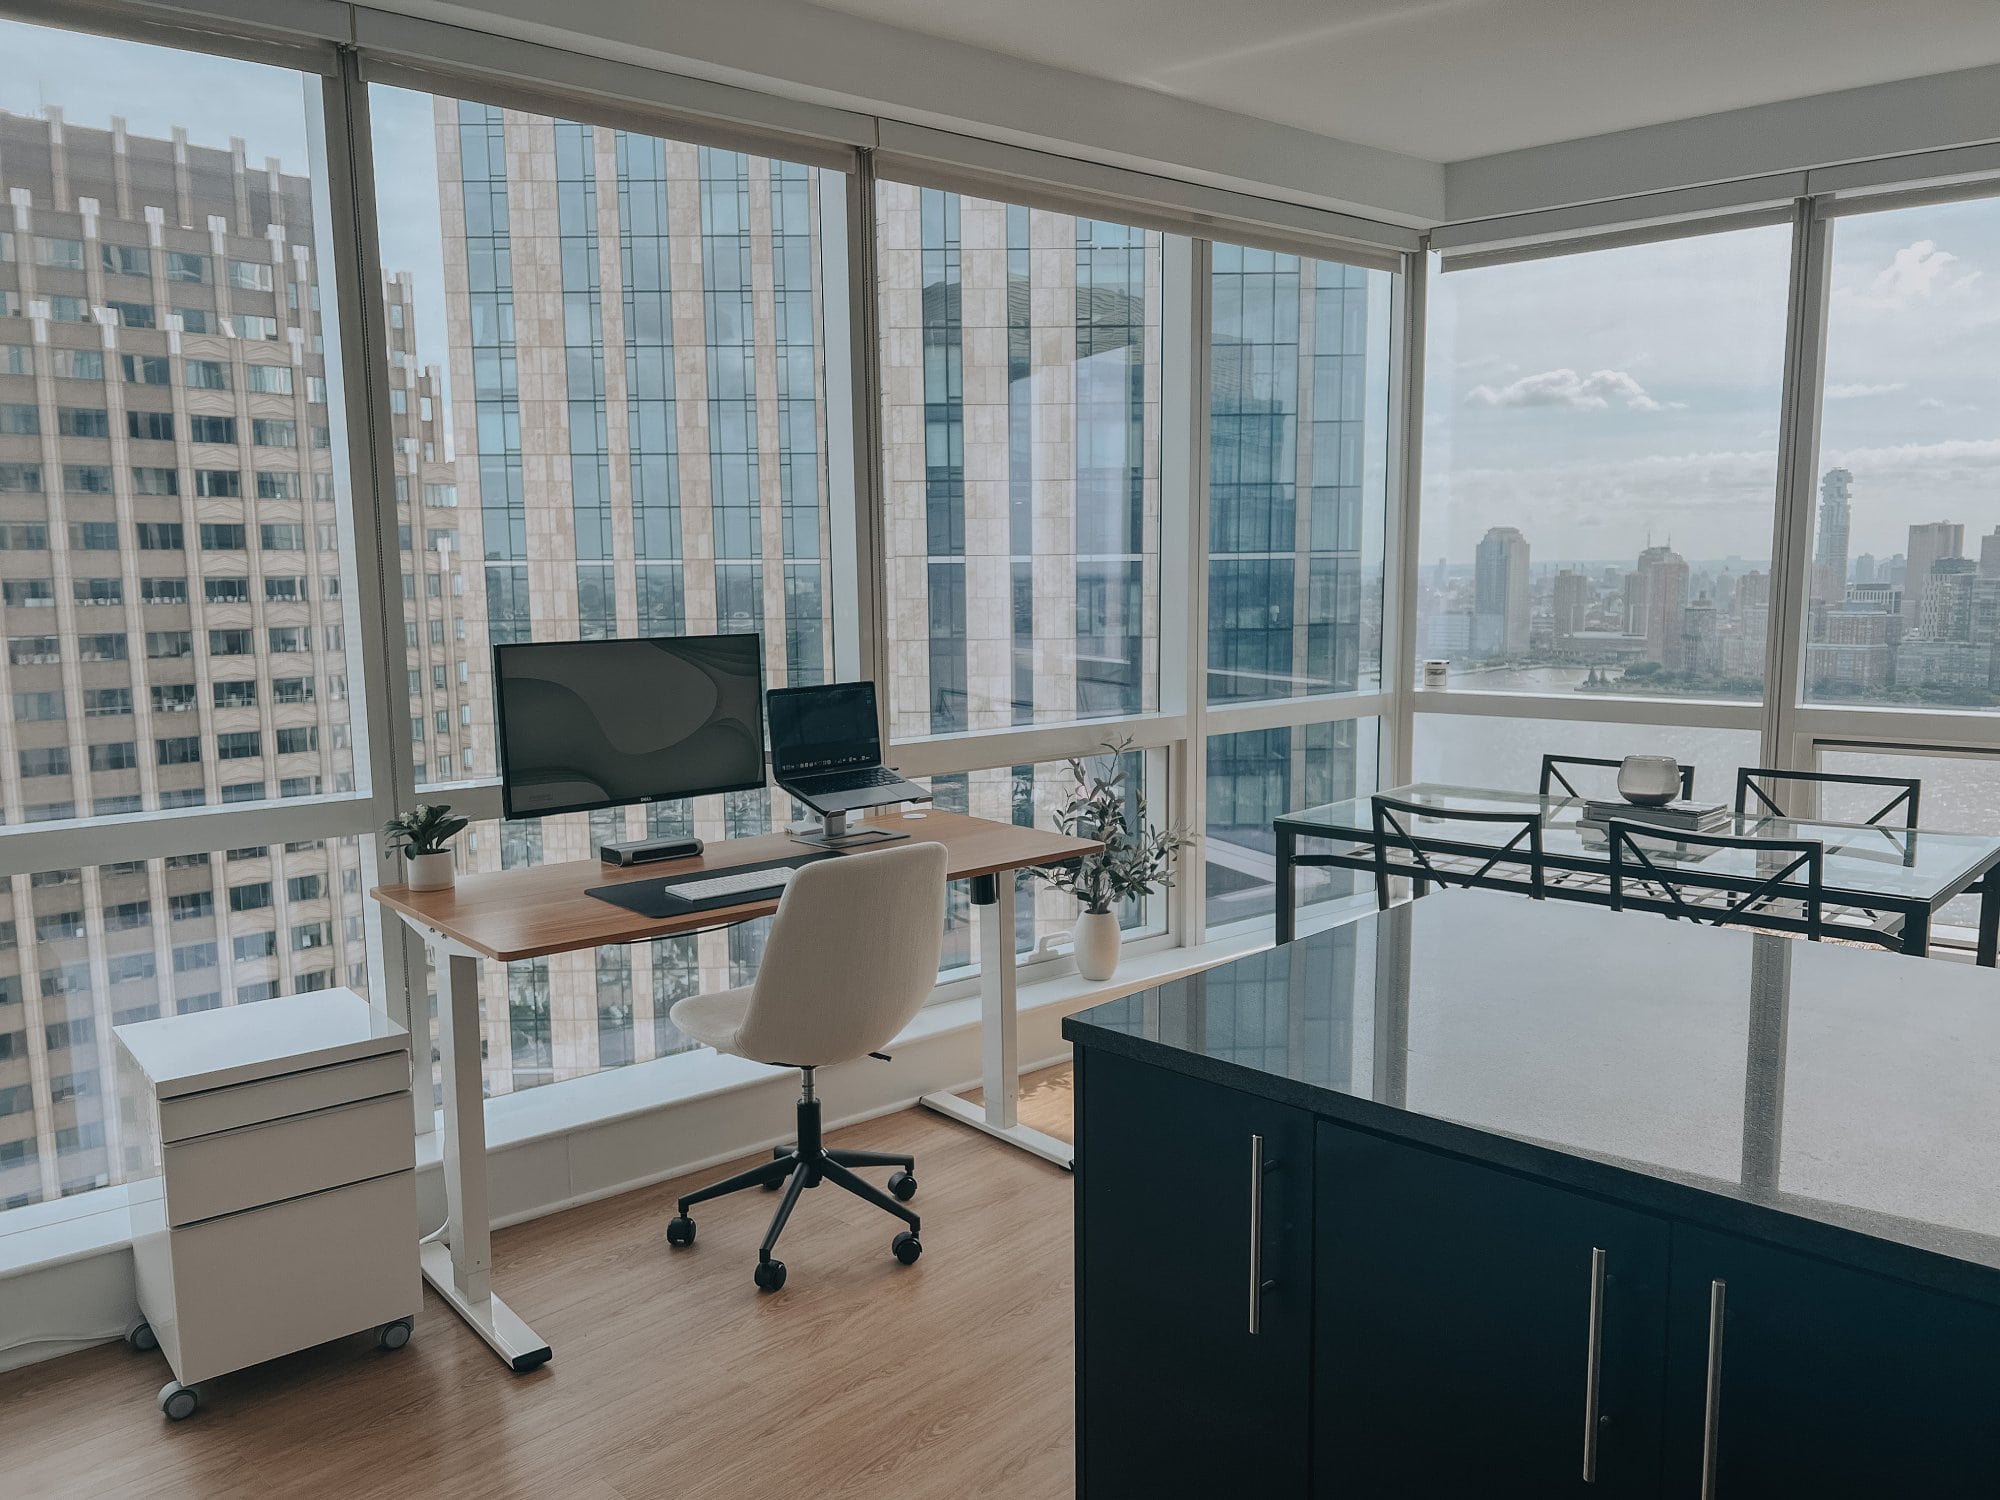 A minimal WFH desk setup featuring panoramic views over Jersey City